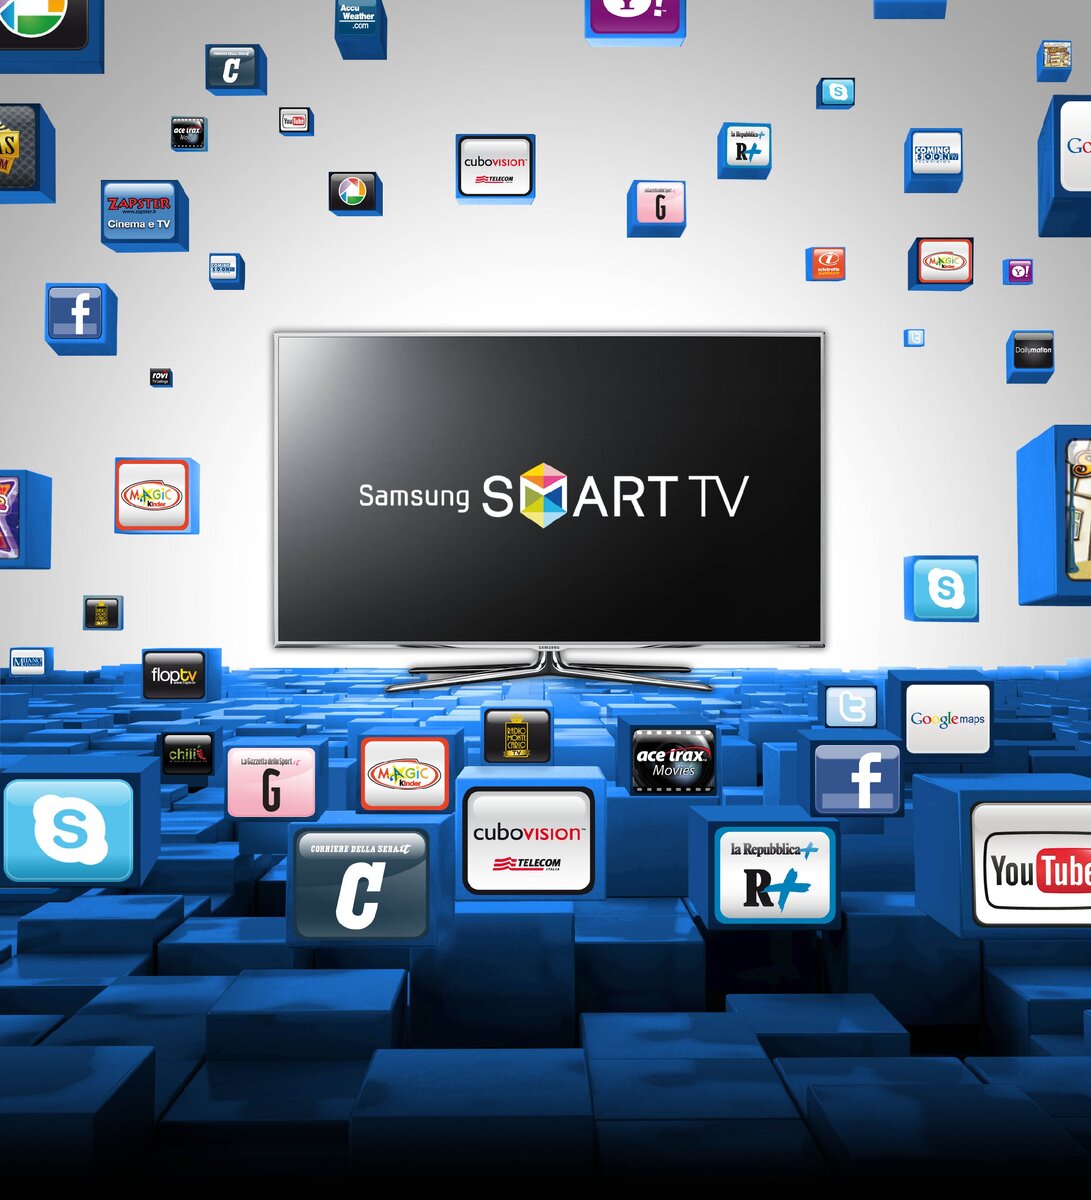 Новый интернет тв. Samsung Smart TV. Телевизор самсунг смарт ТВ. Версия самсунг смарт ТВ 1150. Смарт ТВ телевизор с интернетом.